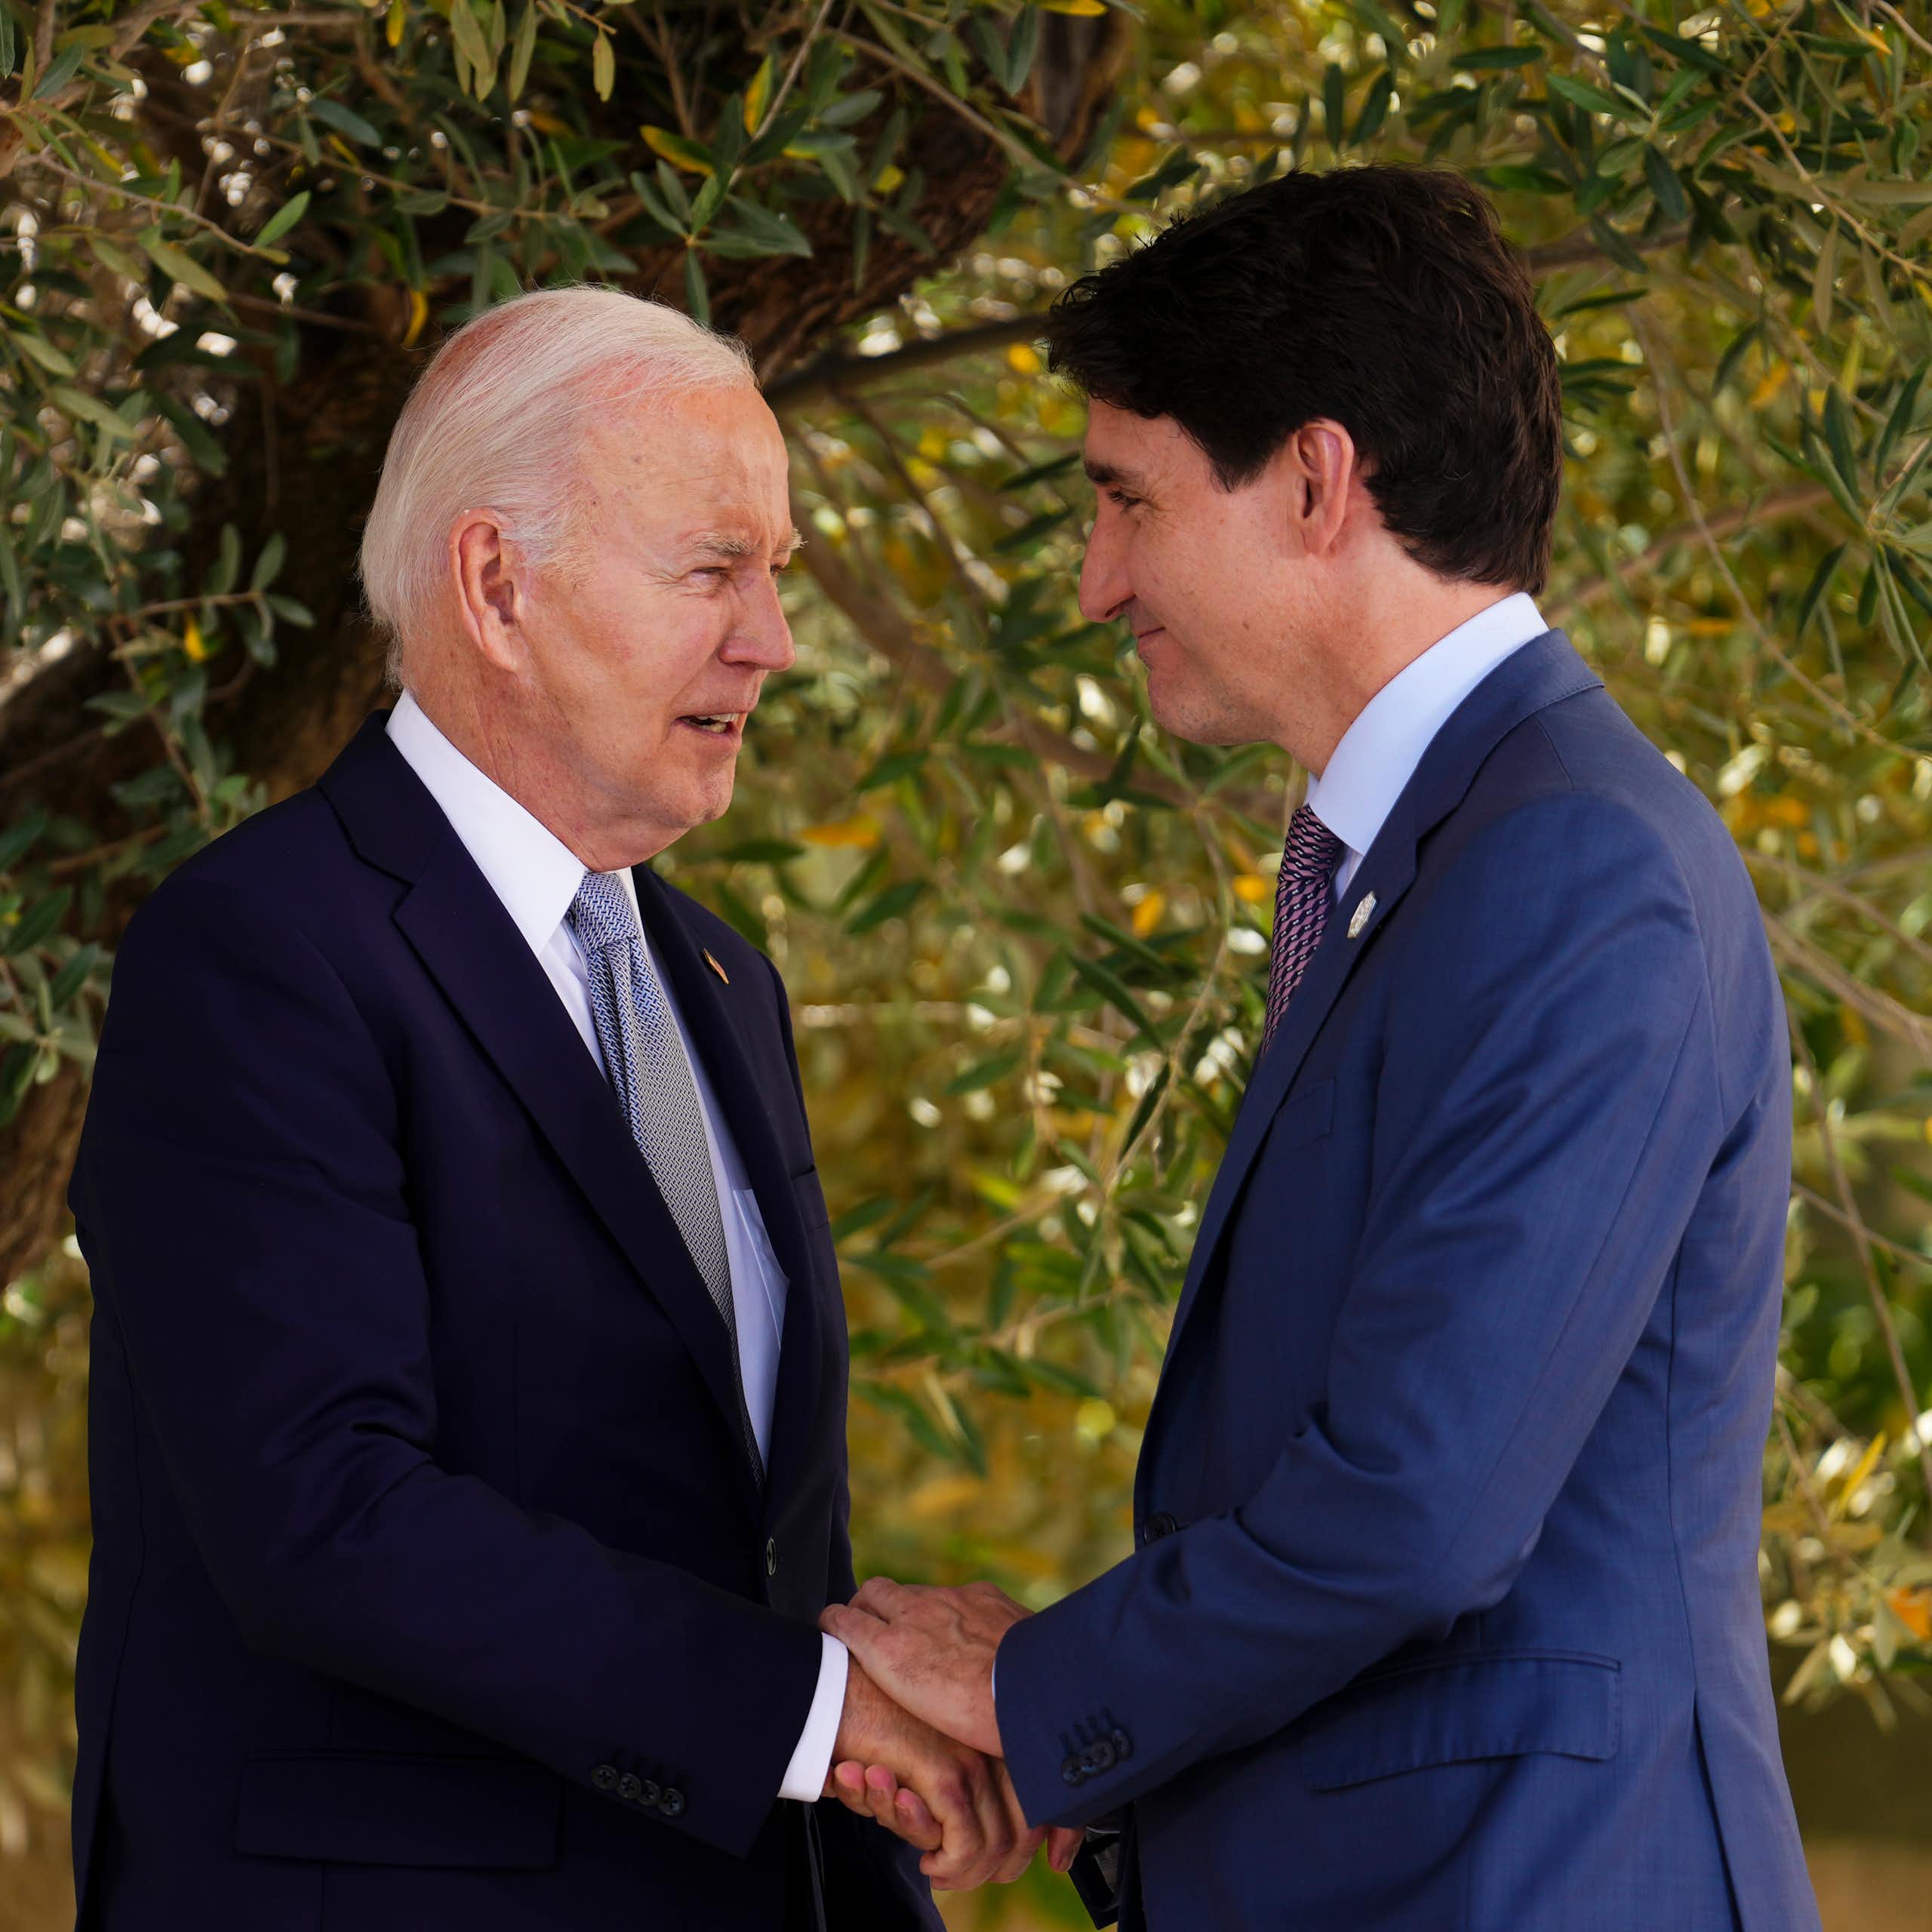 Trudeau on the right grasps Biden's hand.